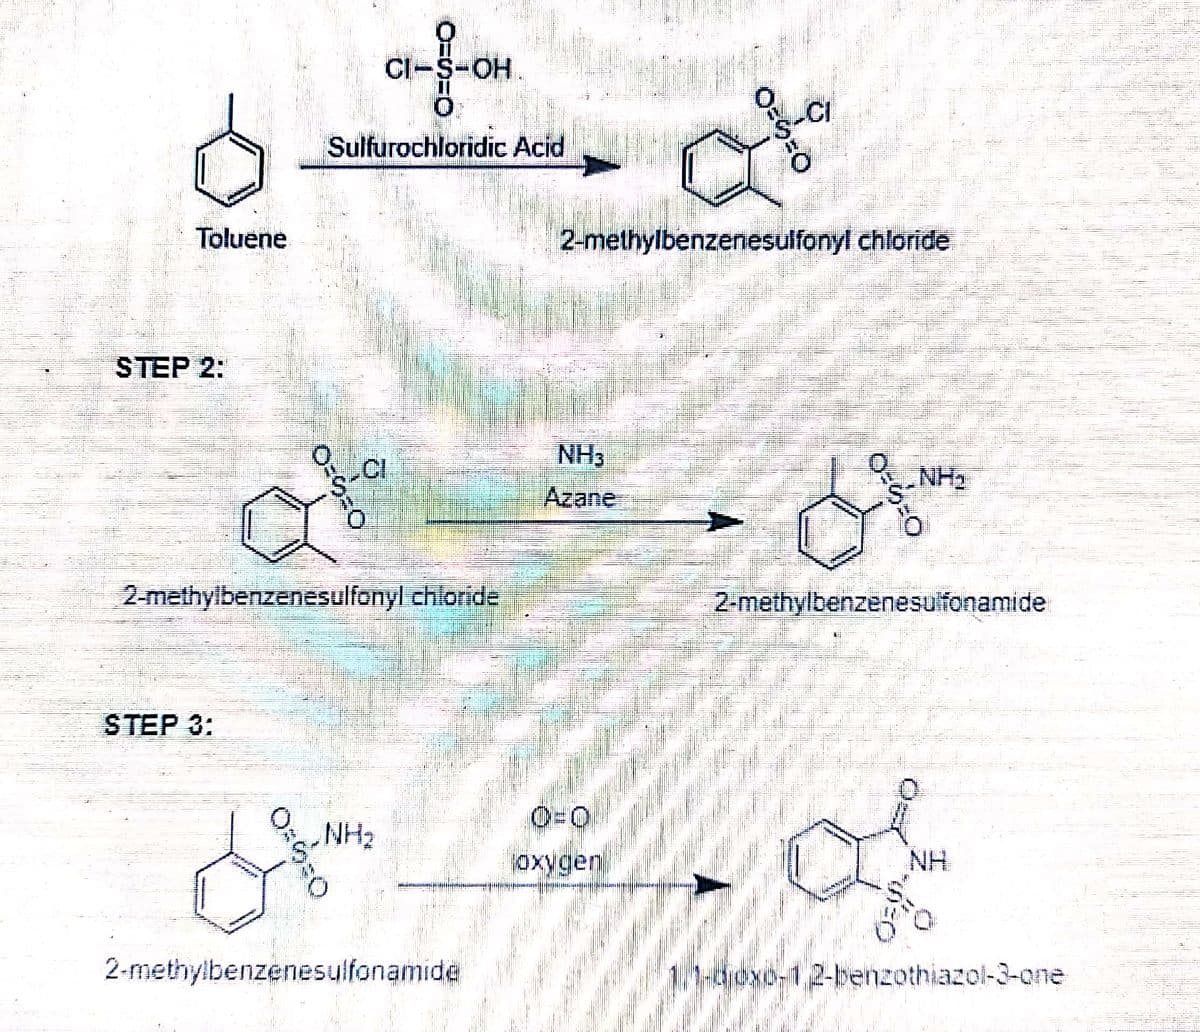 CI-S-OH.
Sulfurochloridic Acid
Toluene
2-methylbenzenesulfonyl chloride
STEP 2:
NH3
„NH2
Azane
2-methylbenzenesulfonyl chloride
2-methylbenzenesulfonamide
STEP 3:
O=0
NH2
NH
2-methylbenzenesulfonamide
11-oxo-1,2-benzothiazol-3-one
〇=ら=O
〇-ら=0
